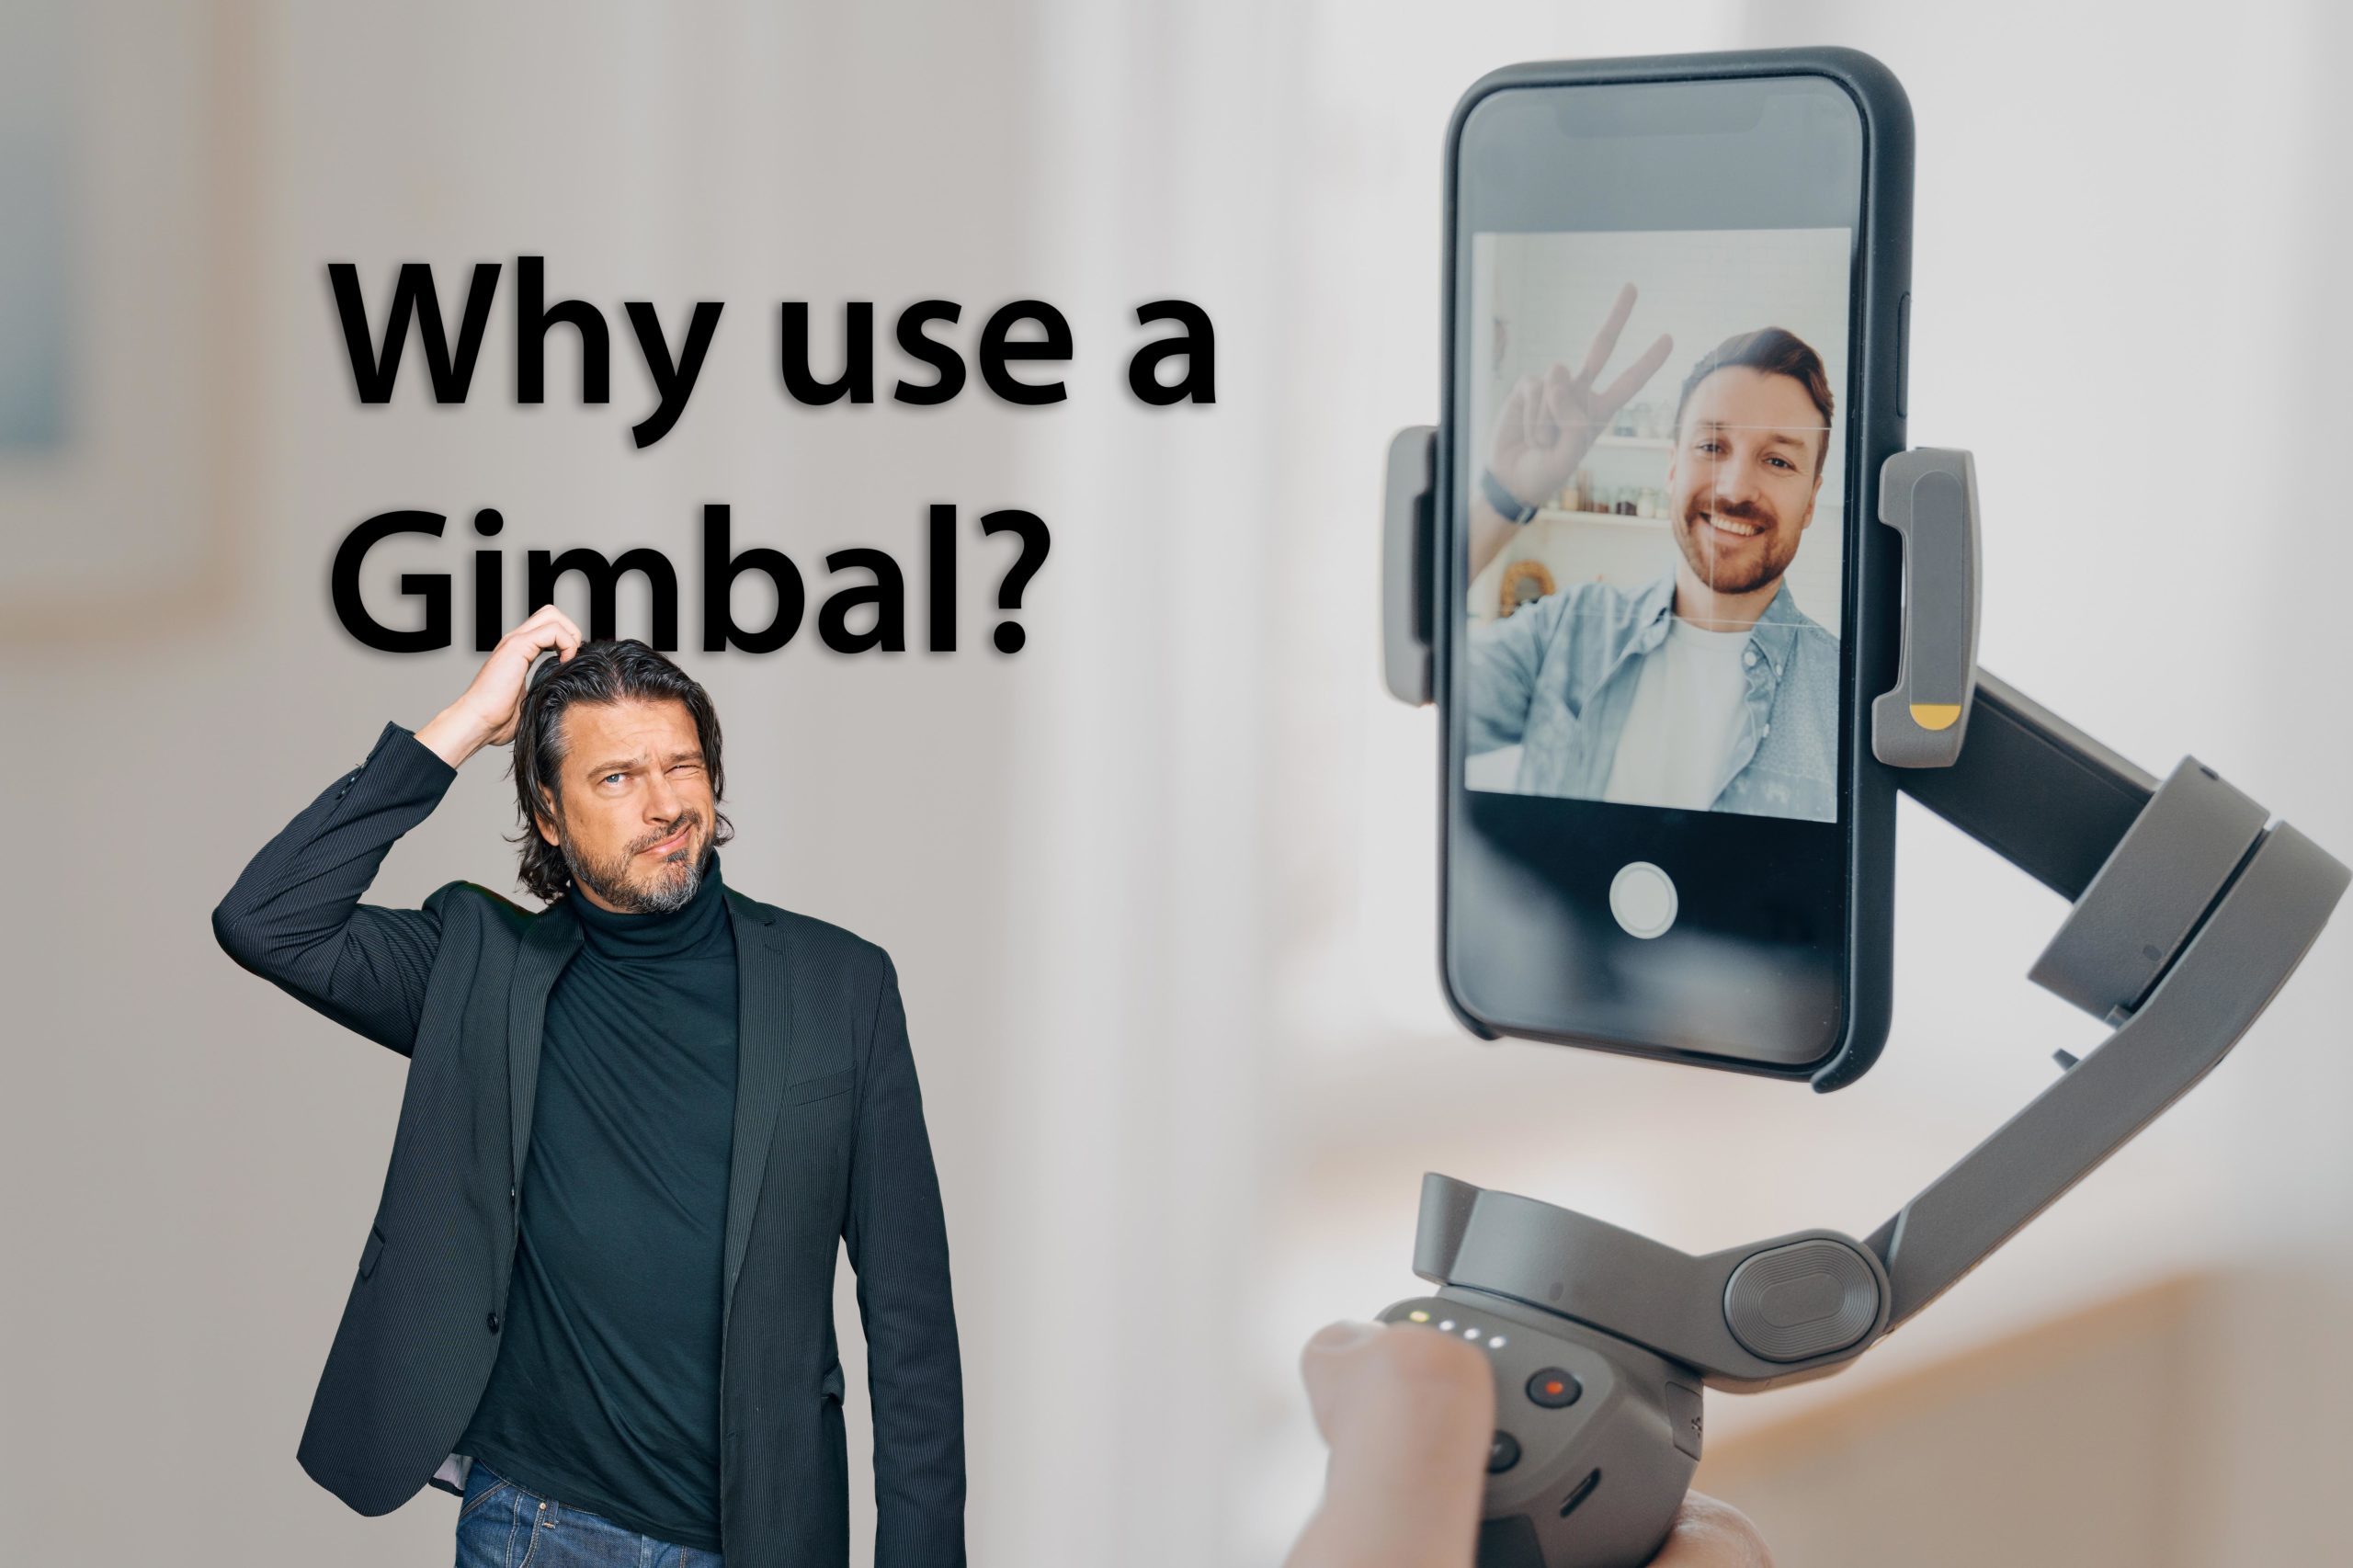 Do you need a smartphone gimbal?